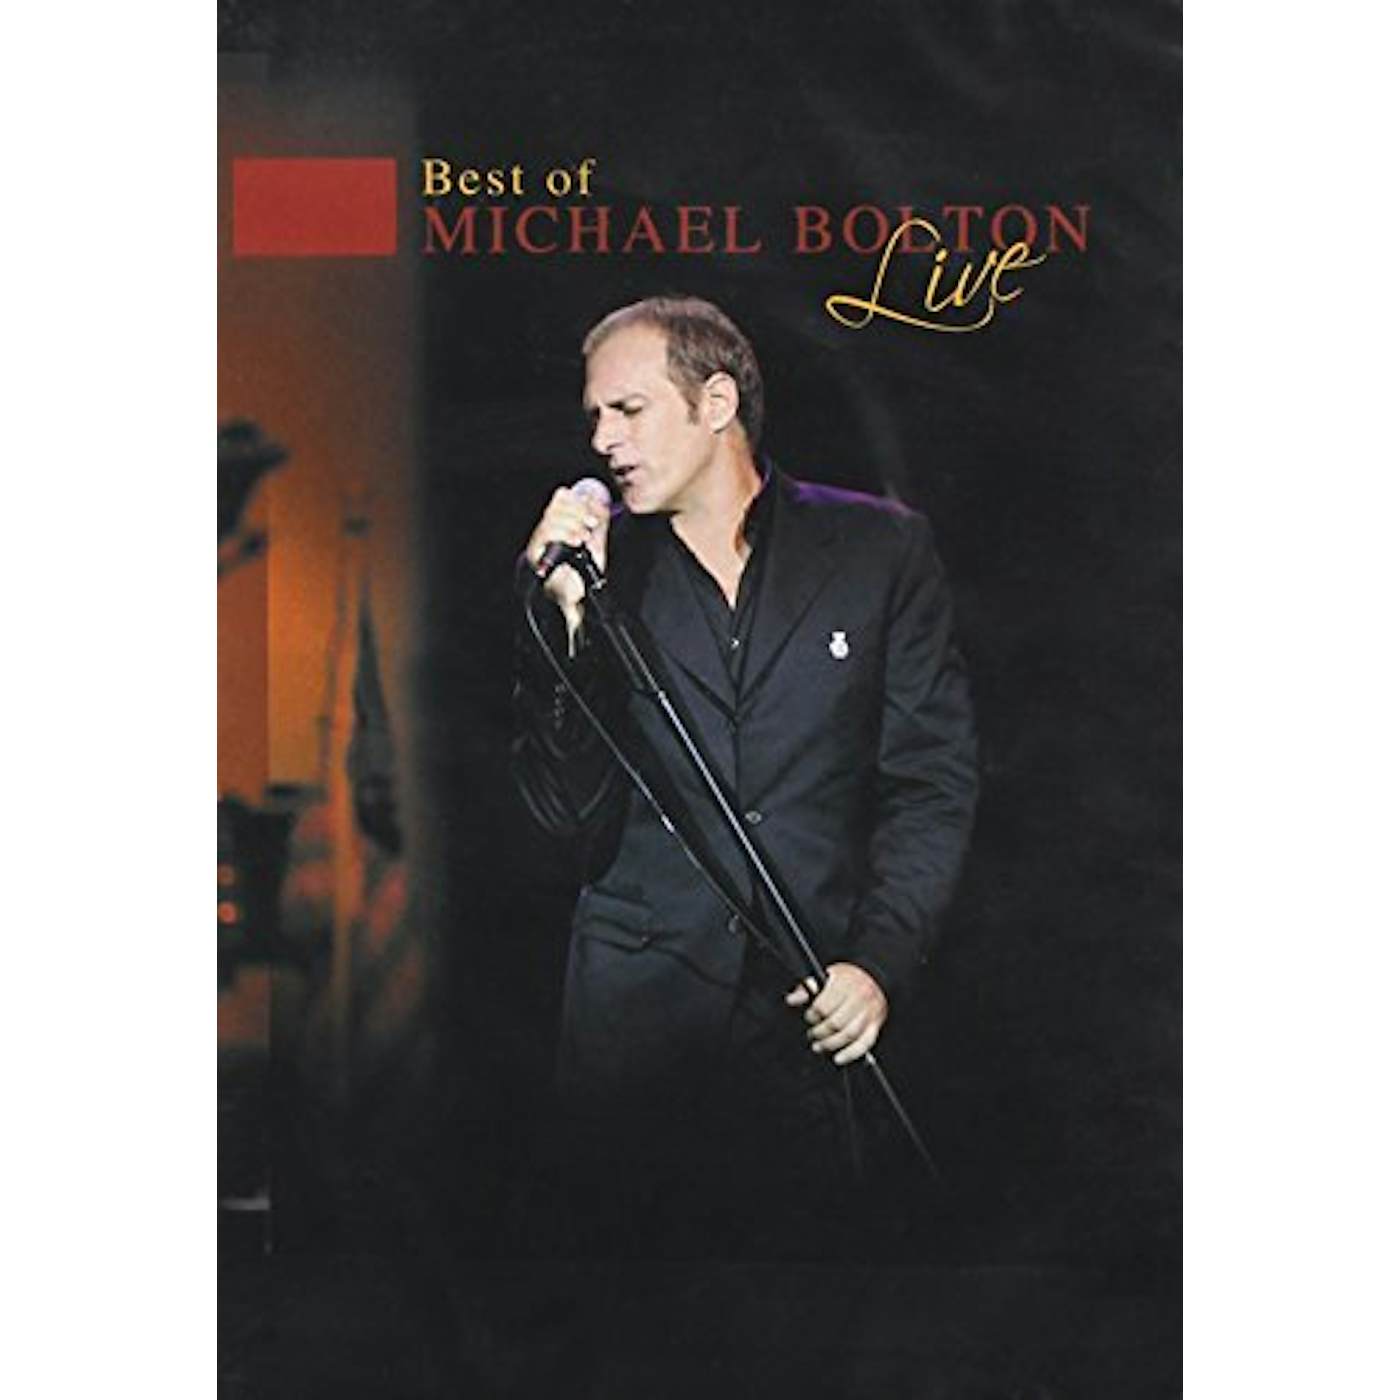 Michael Bolton BEST OF LIVE DVD